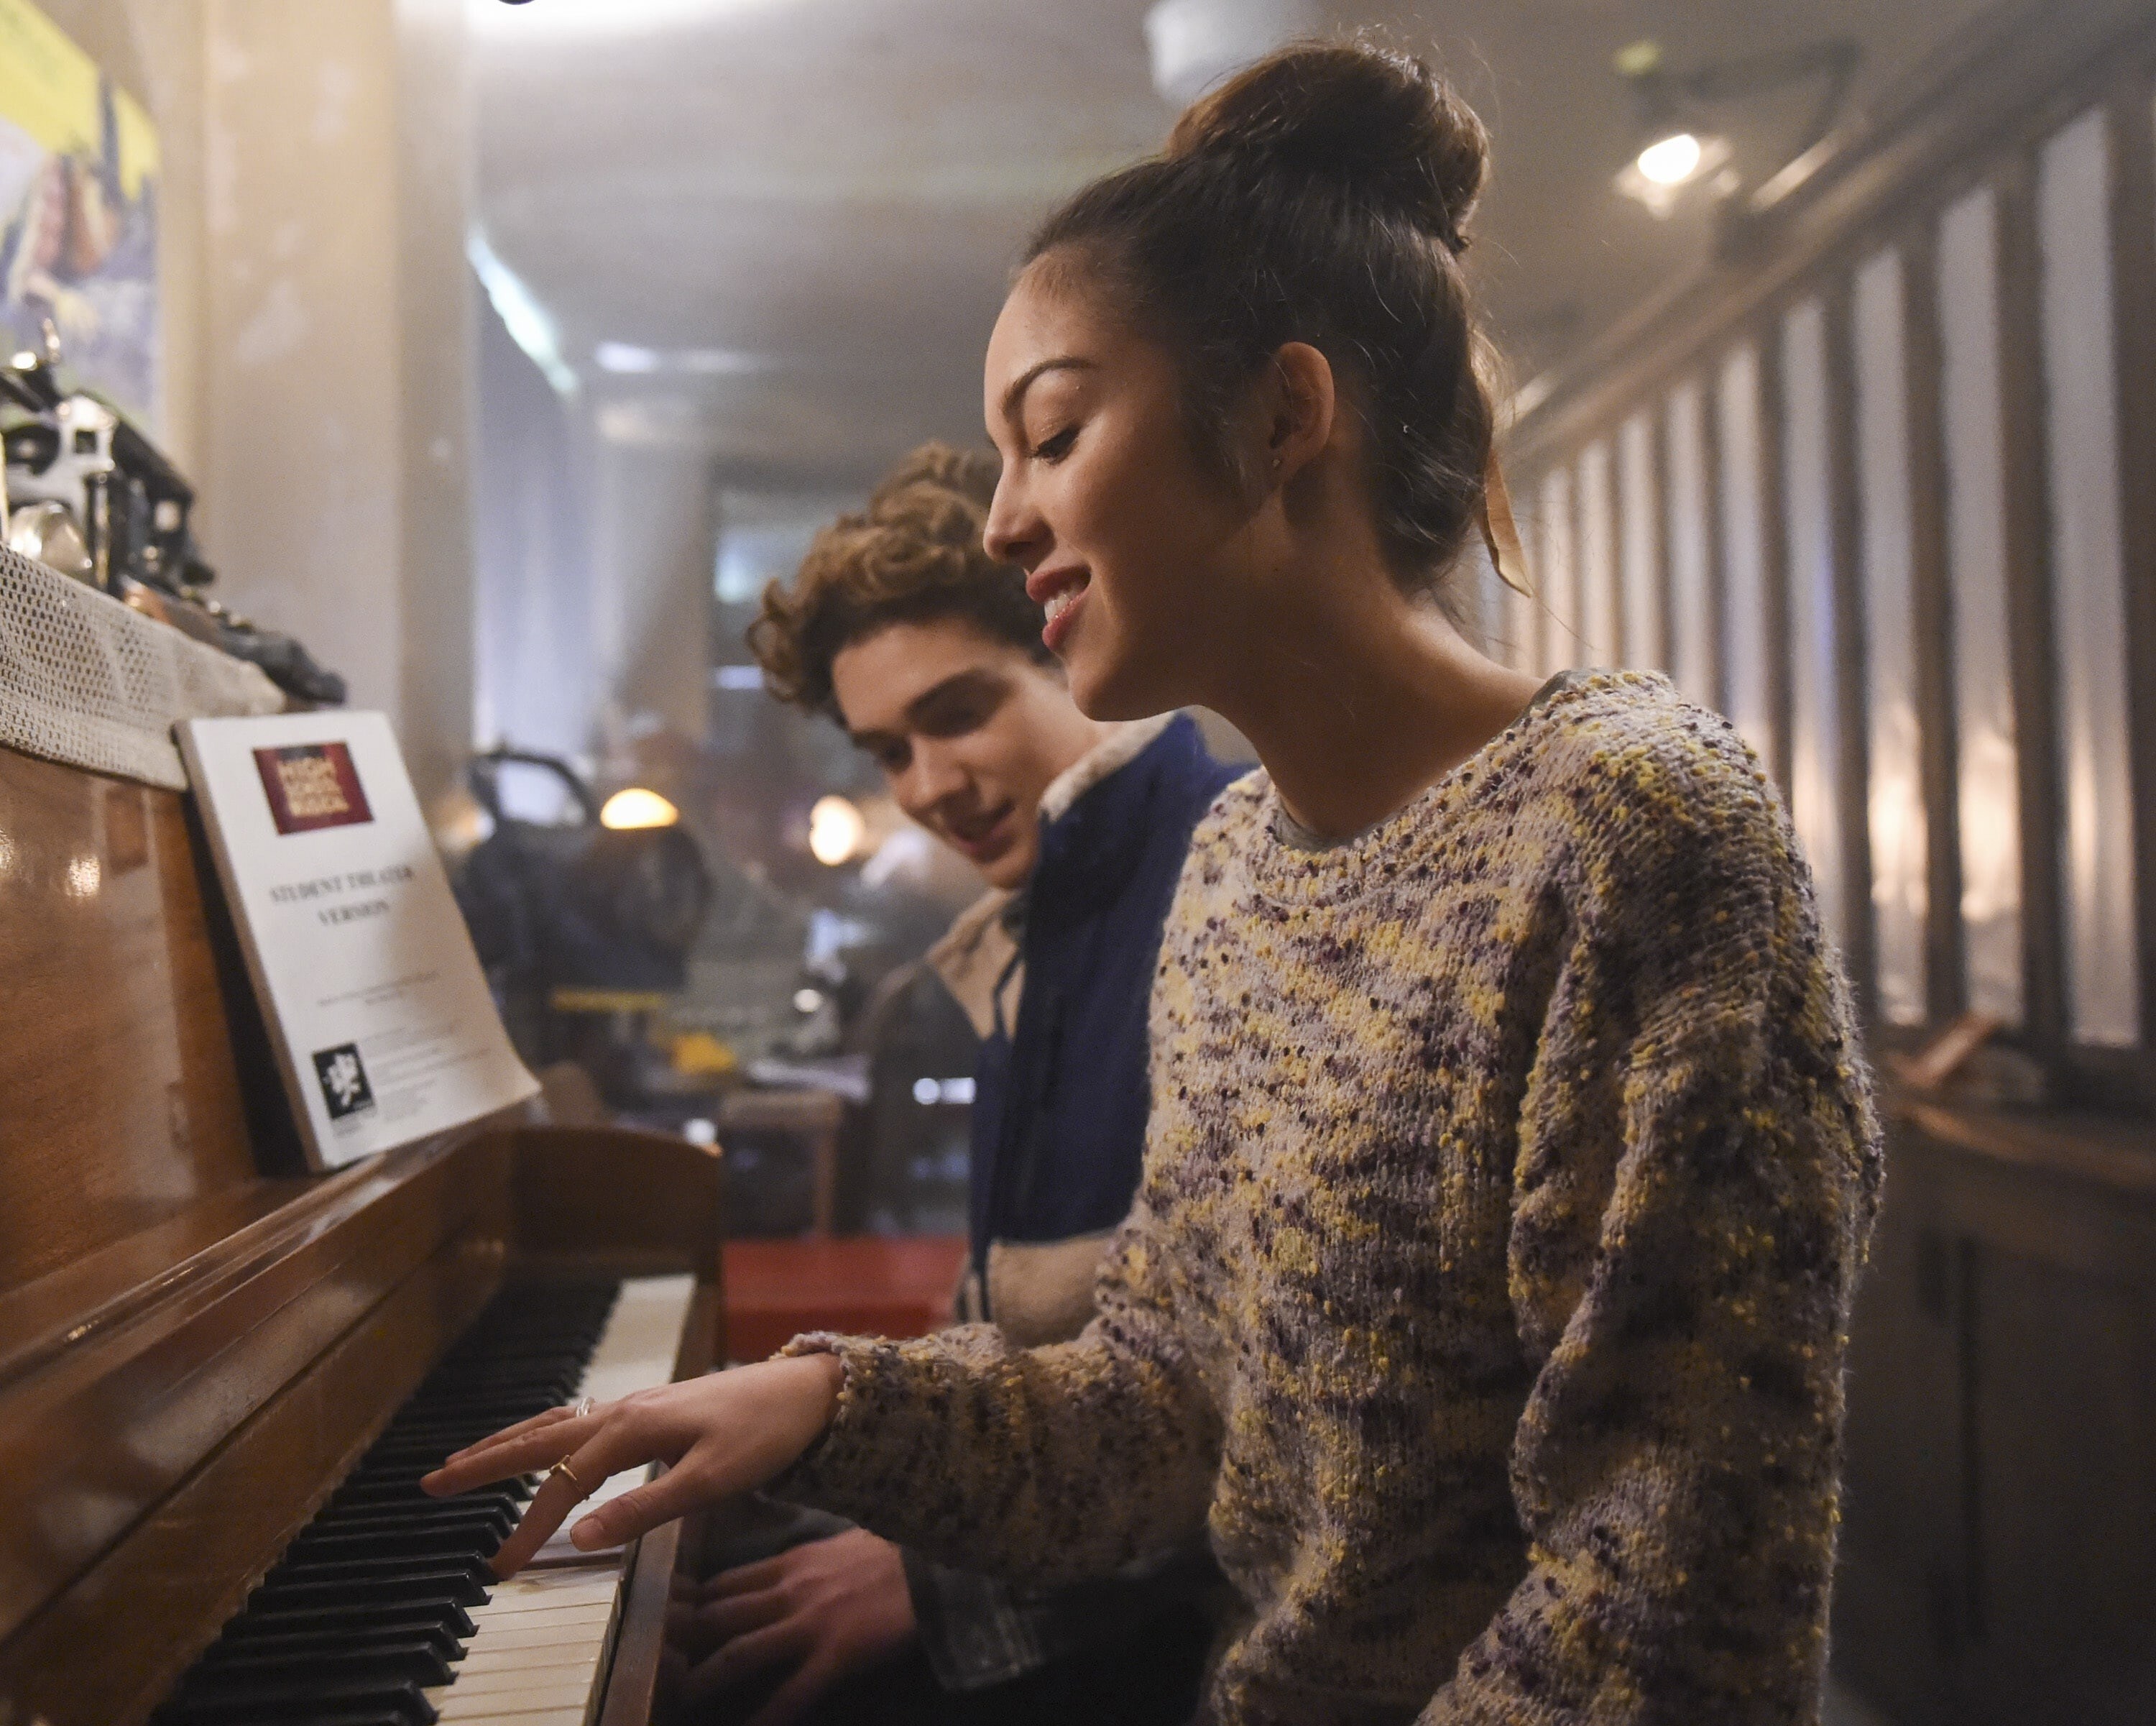 Teen girl in sweater playing the piano